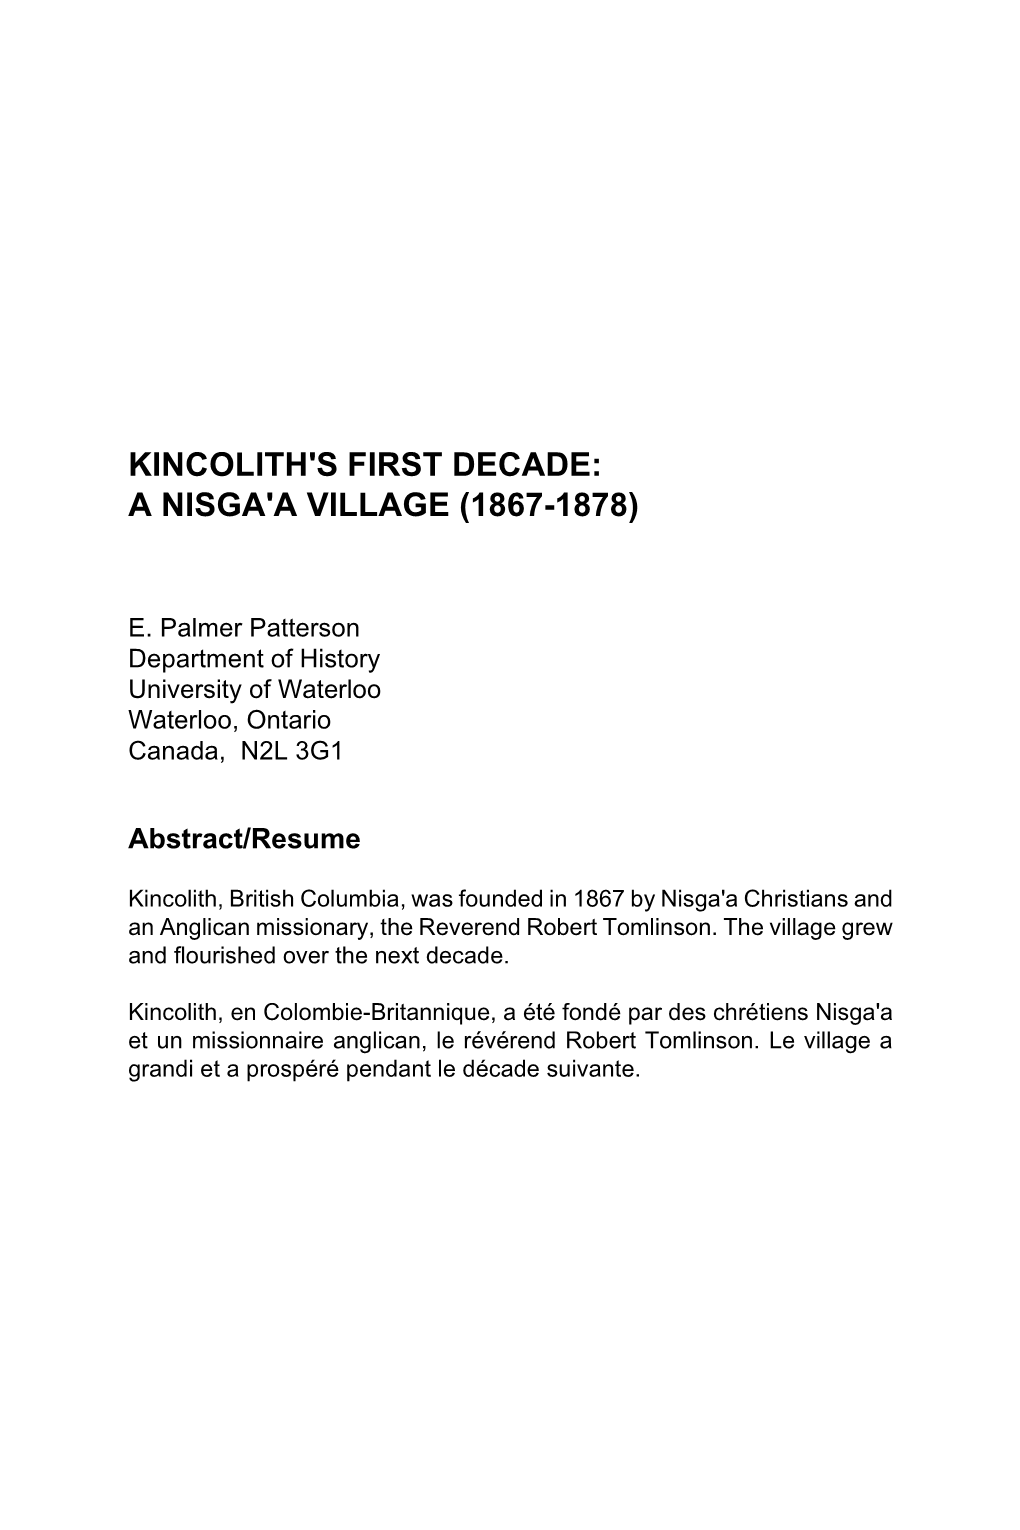 Kincolith's First Decade: a Nisga'a Village (1867-1878)